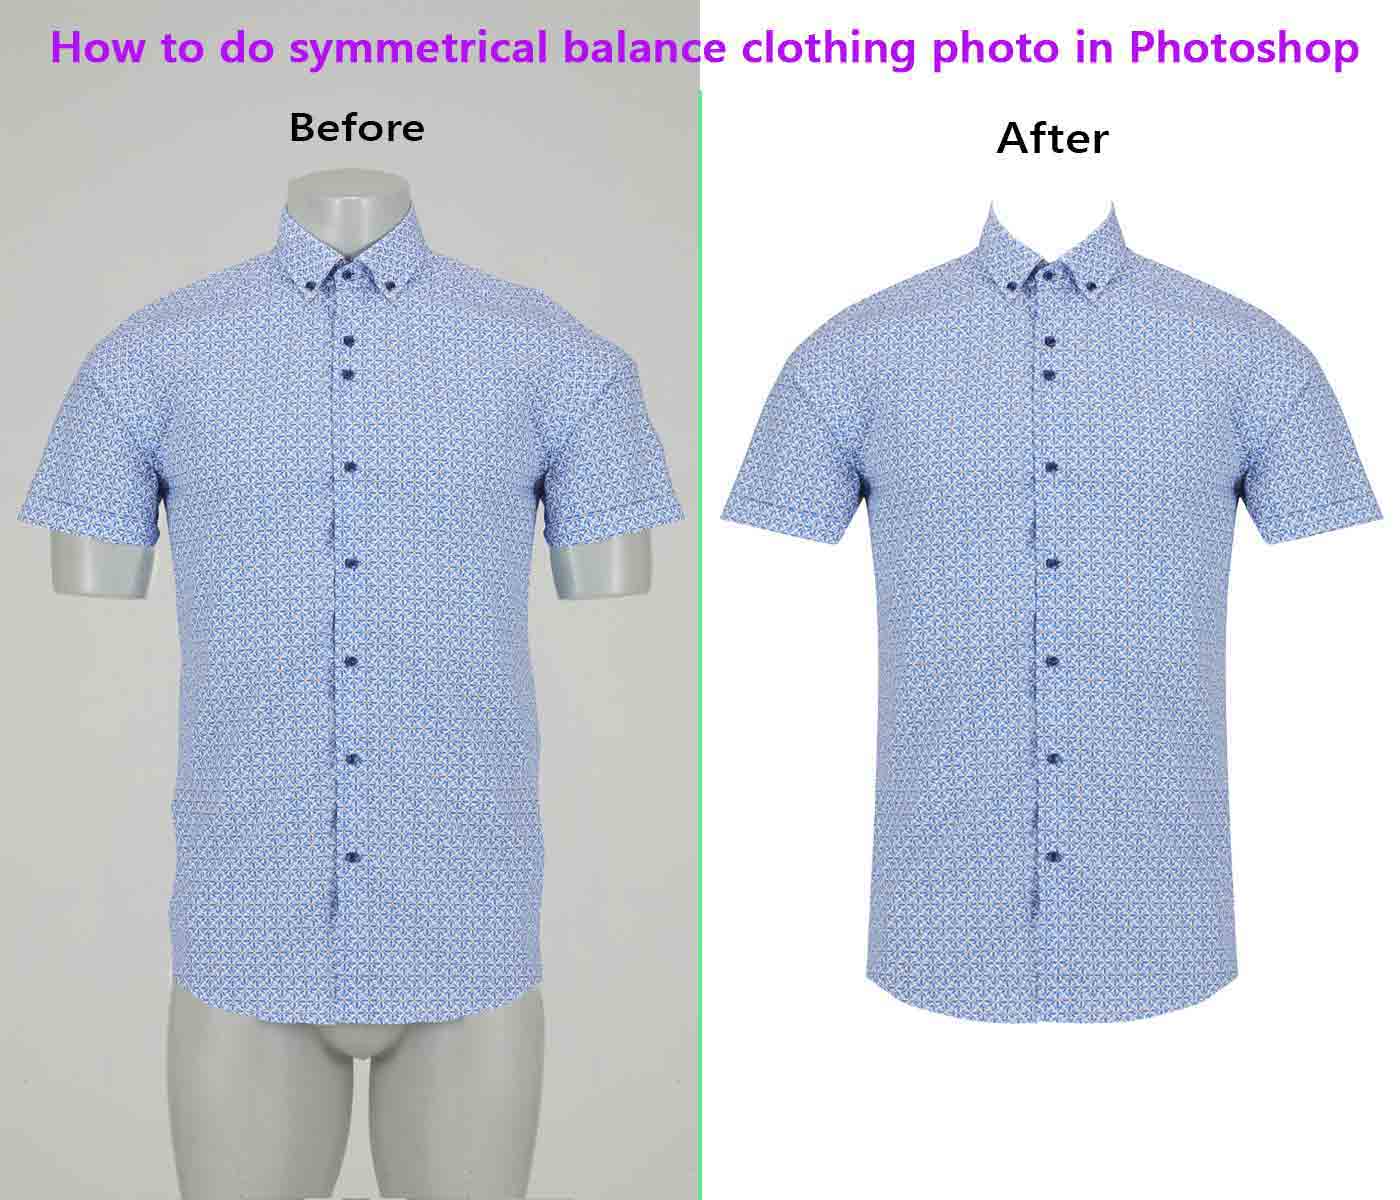 How to do symmetrical balance clothing photo in Photoshop